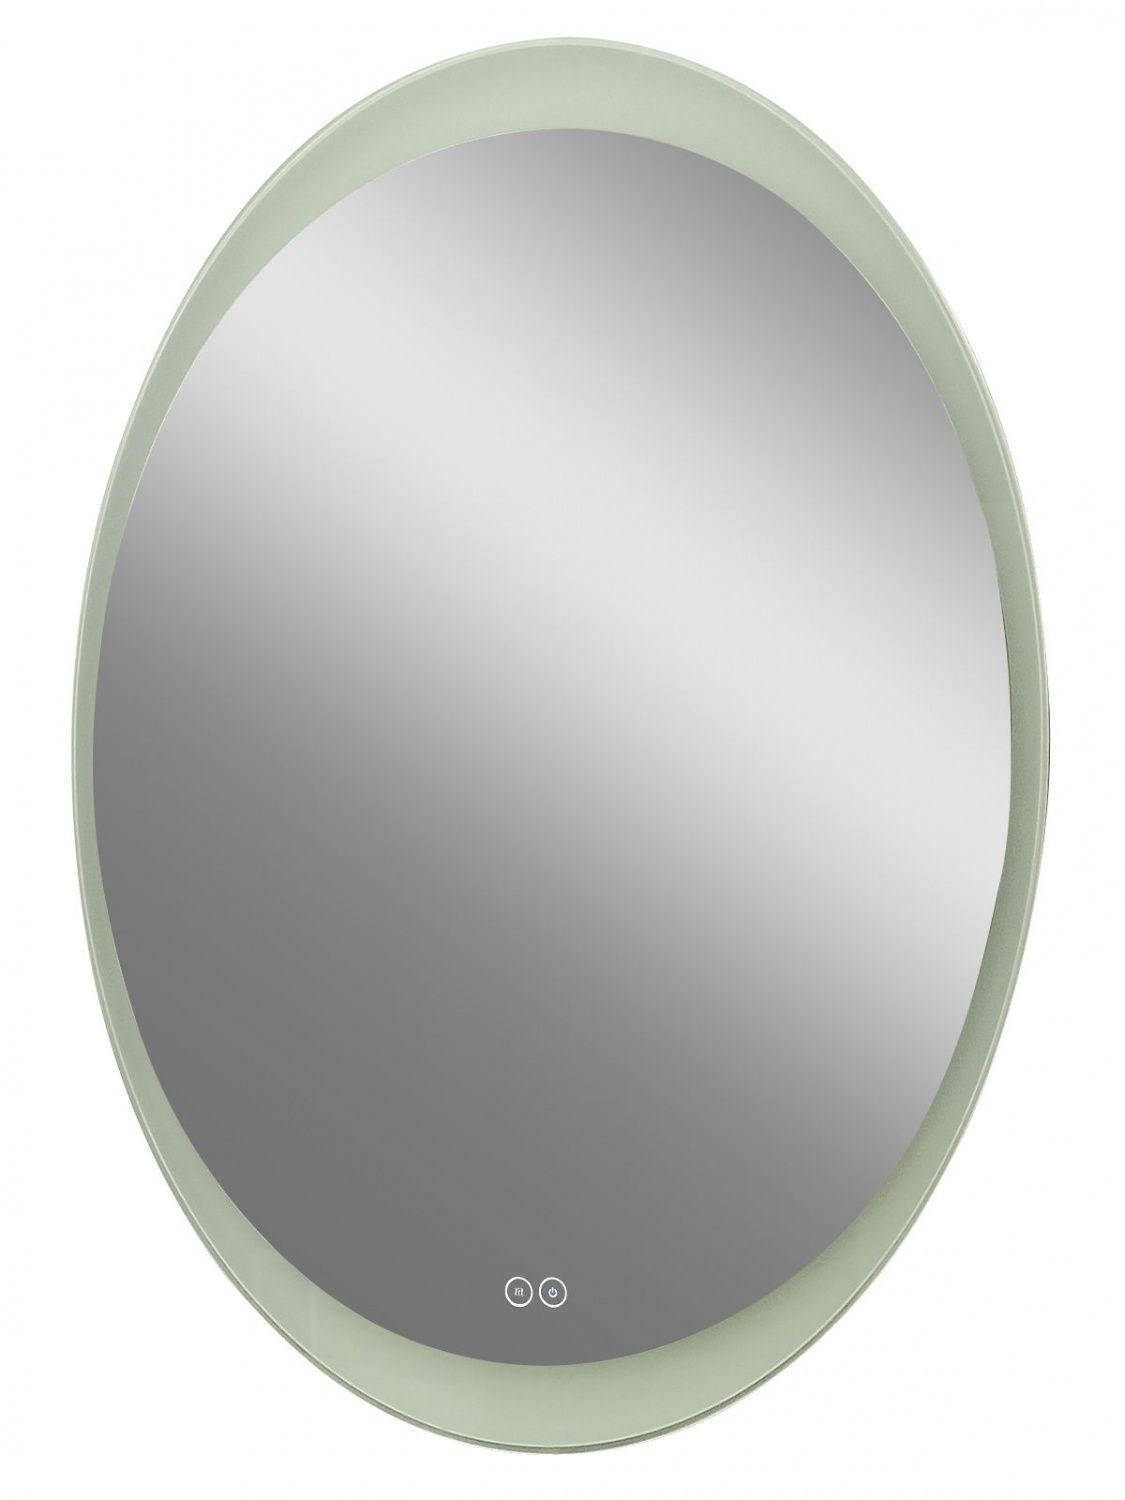 Зеркало Art&Max Ovale 60x105 см, с функцией антипар